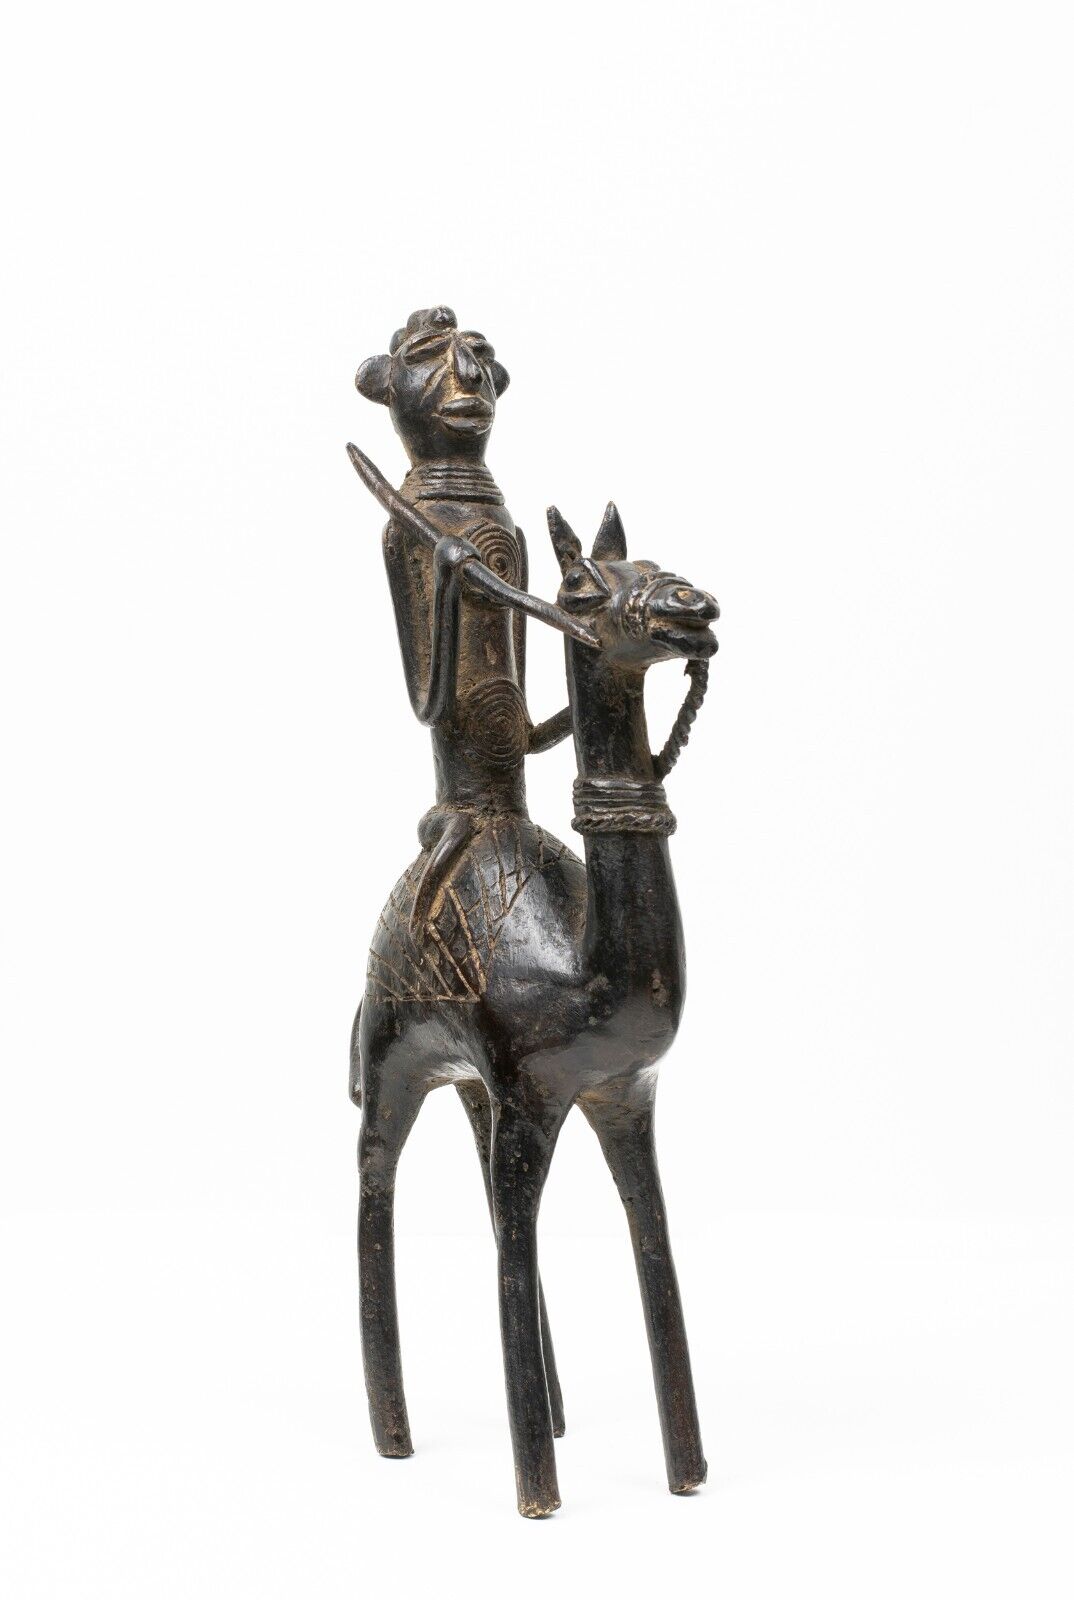 A West African Bronze Riding Figure